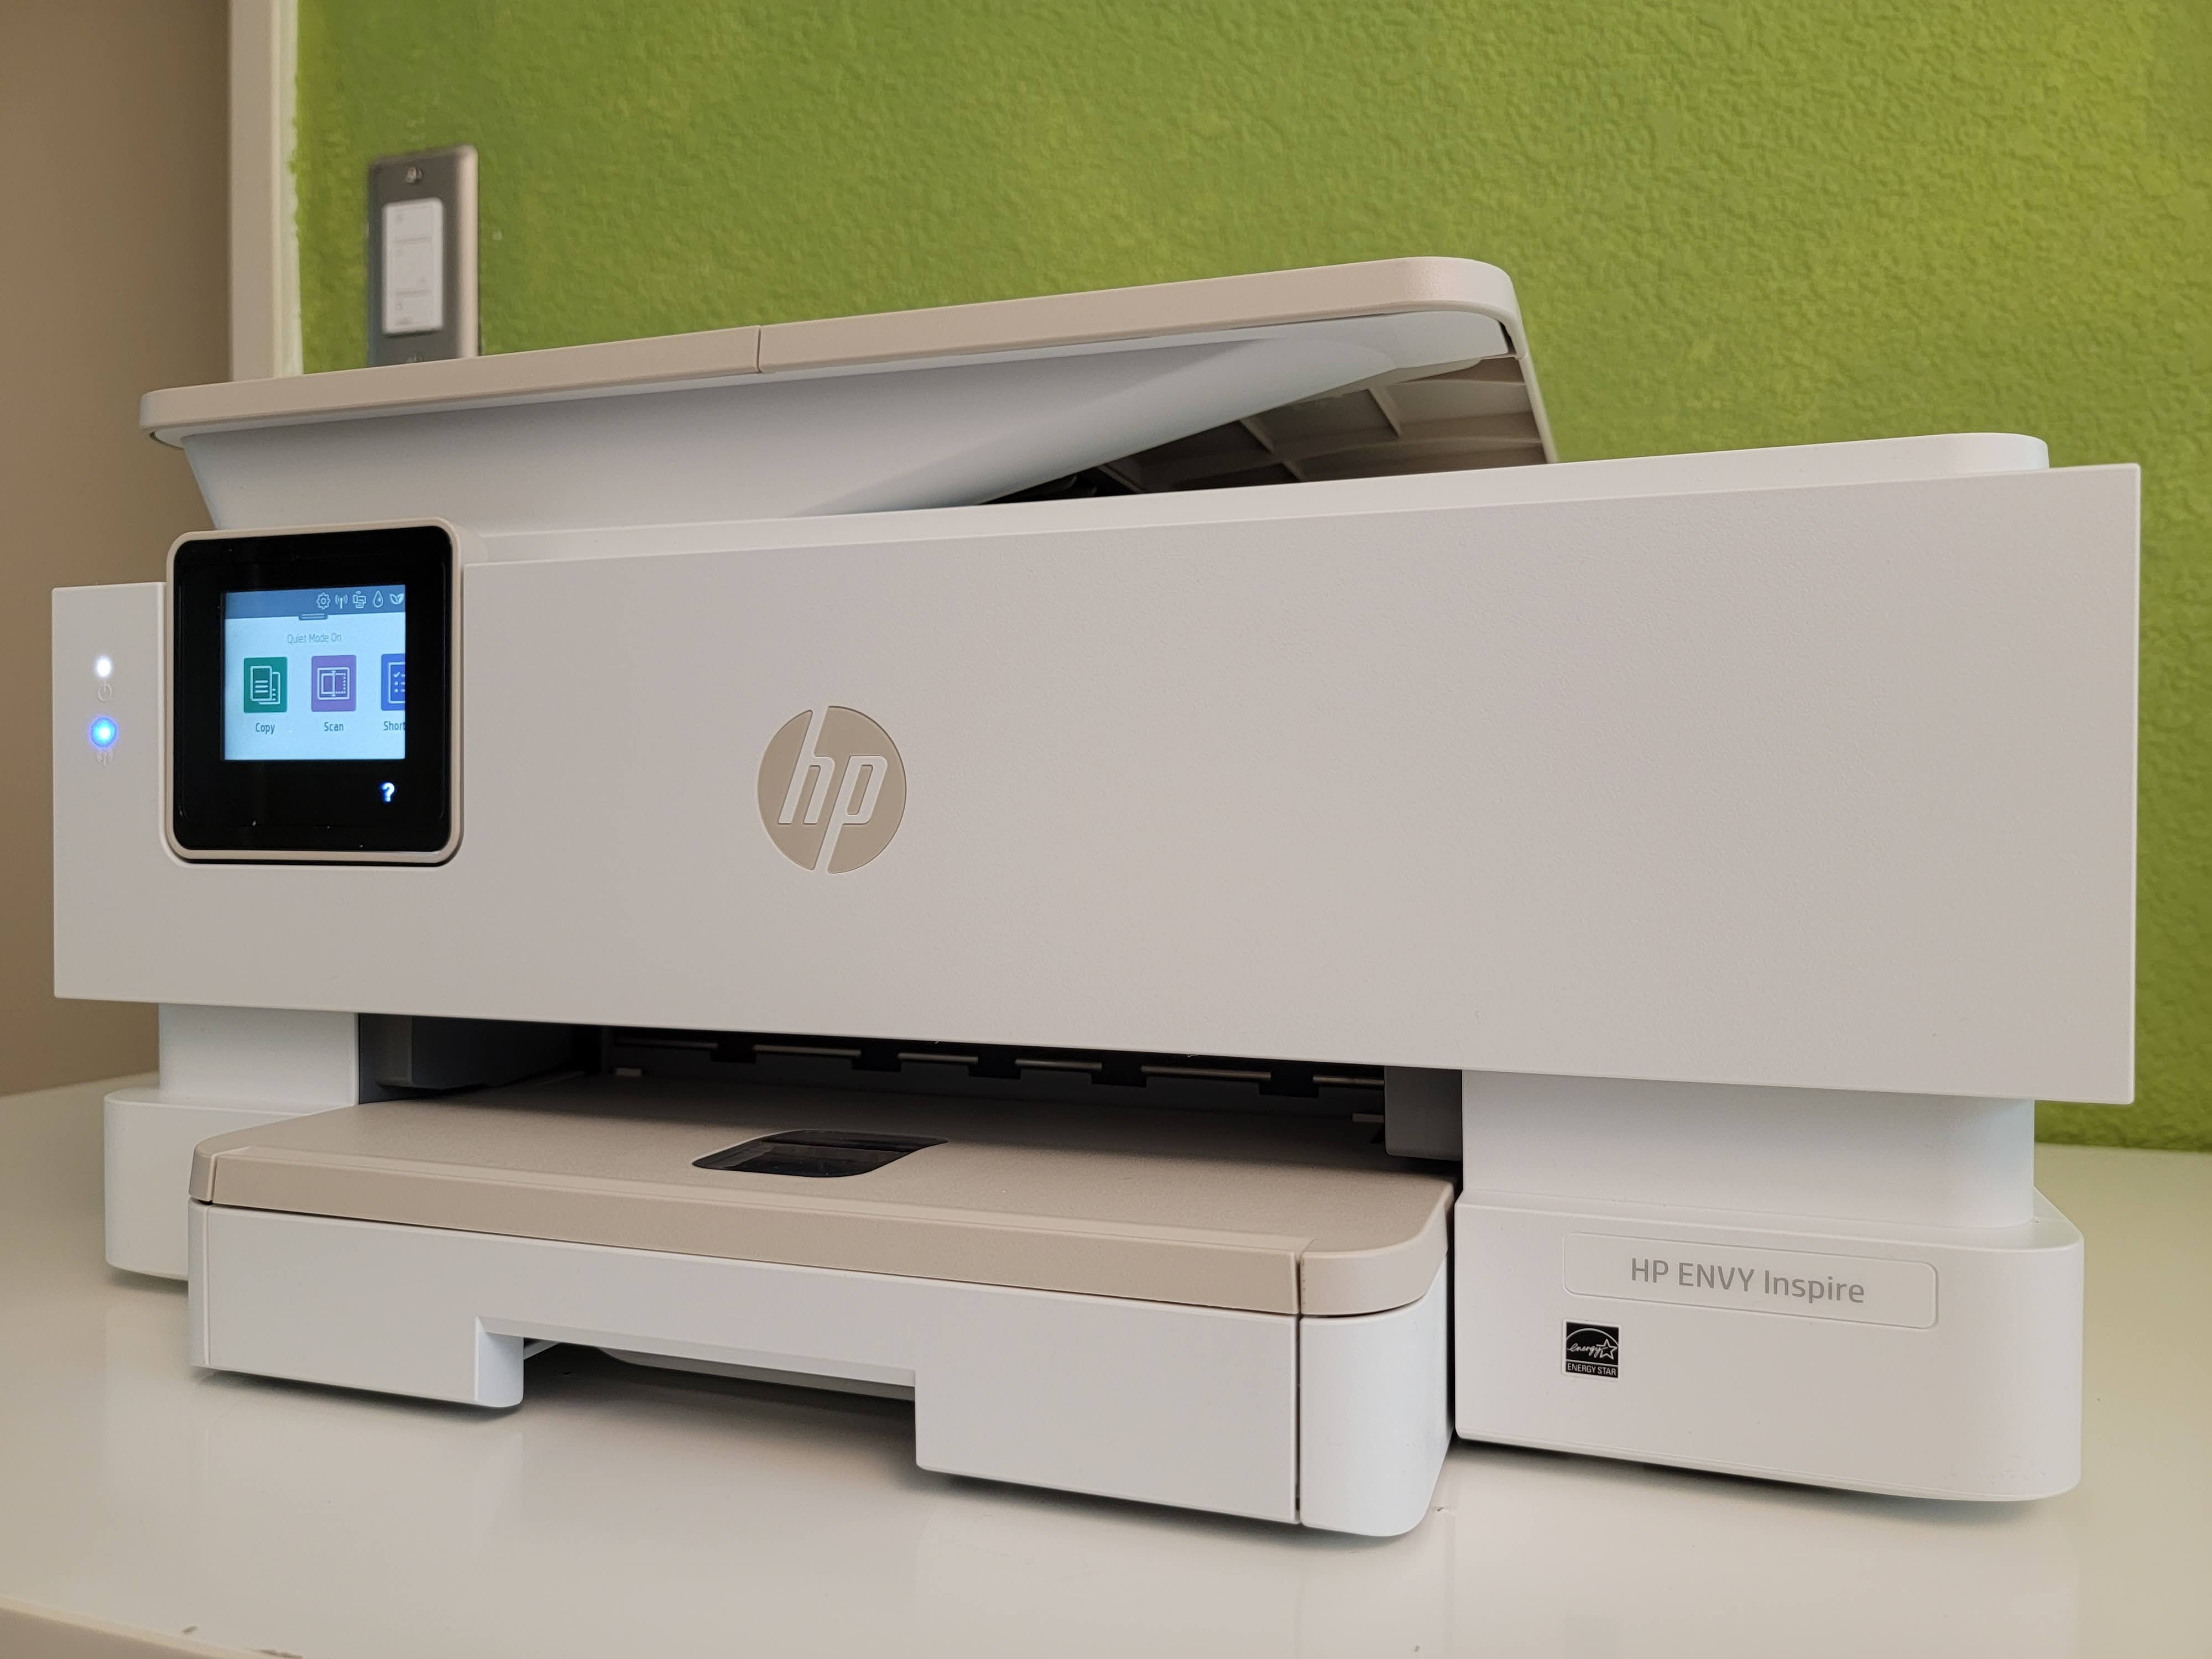 compressie bewondering radicaal HP Envy Inspire 7900e Review: A Versatile Office Printer | Digital Trends